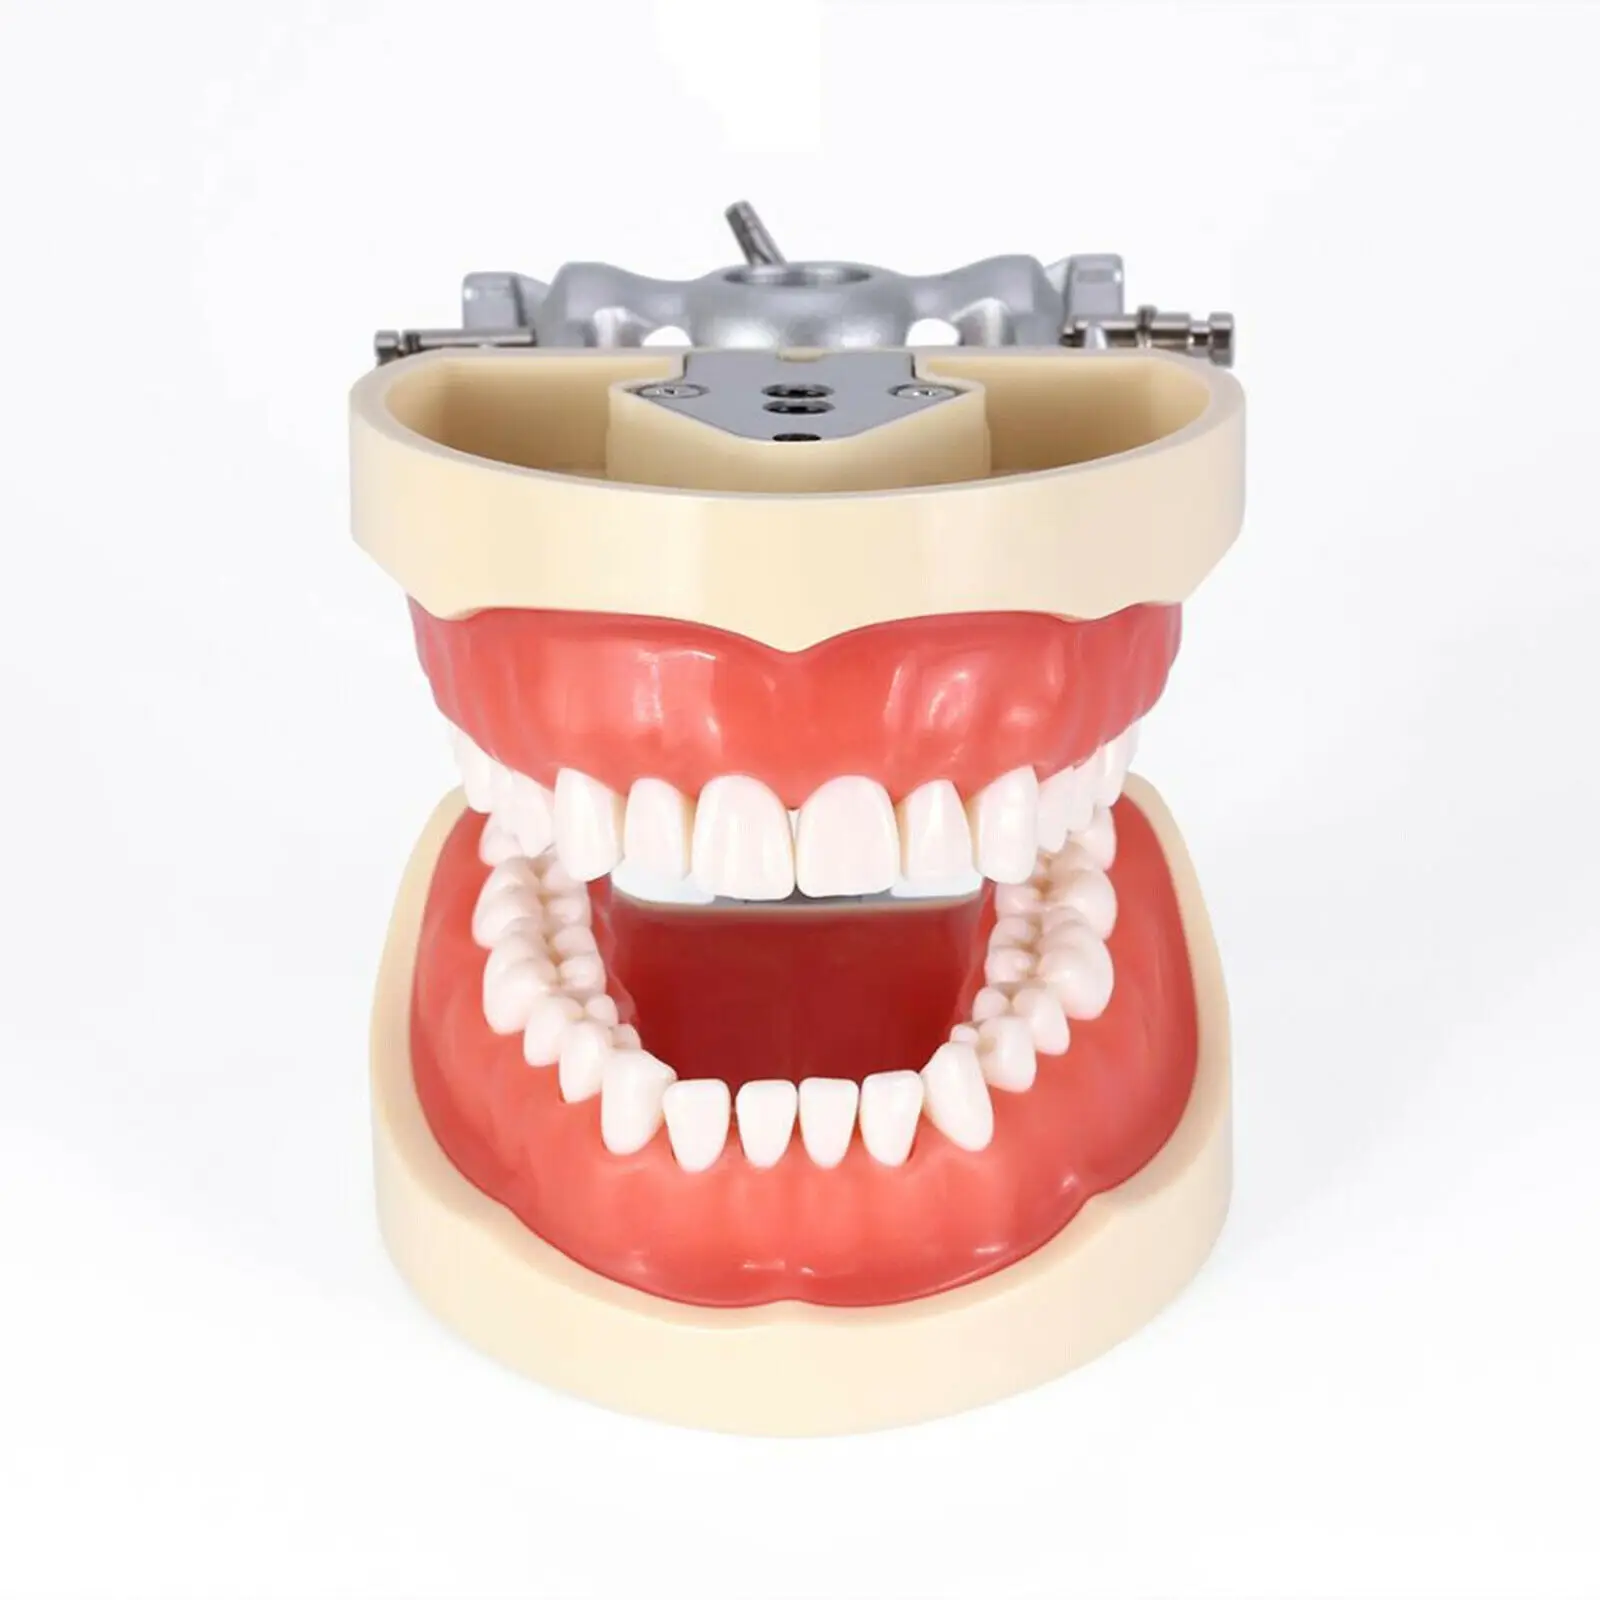 Kilgore NISSIN 200 Type Dental Typodont Model Removable Preparation Teeth 32Pc Dental Demonstration Model Odontologia Accesorios